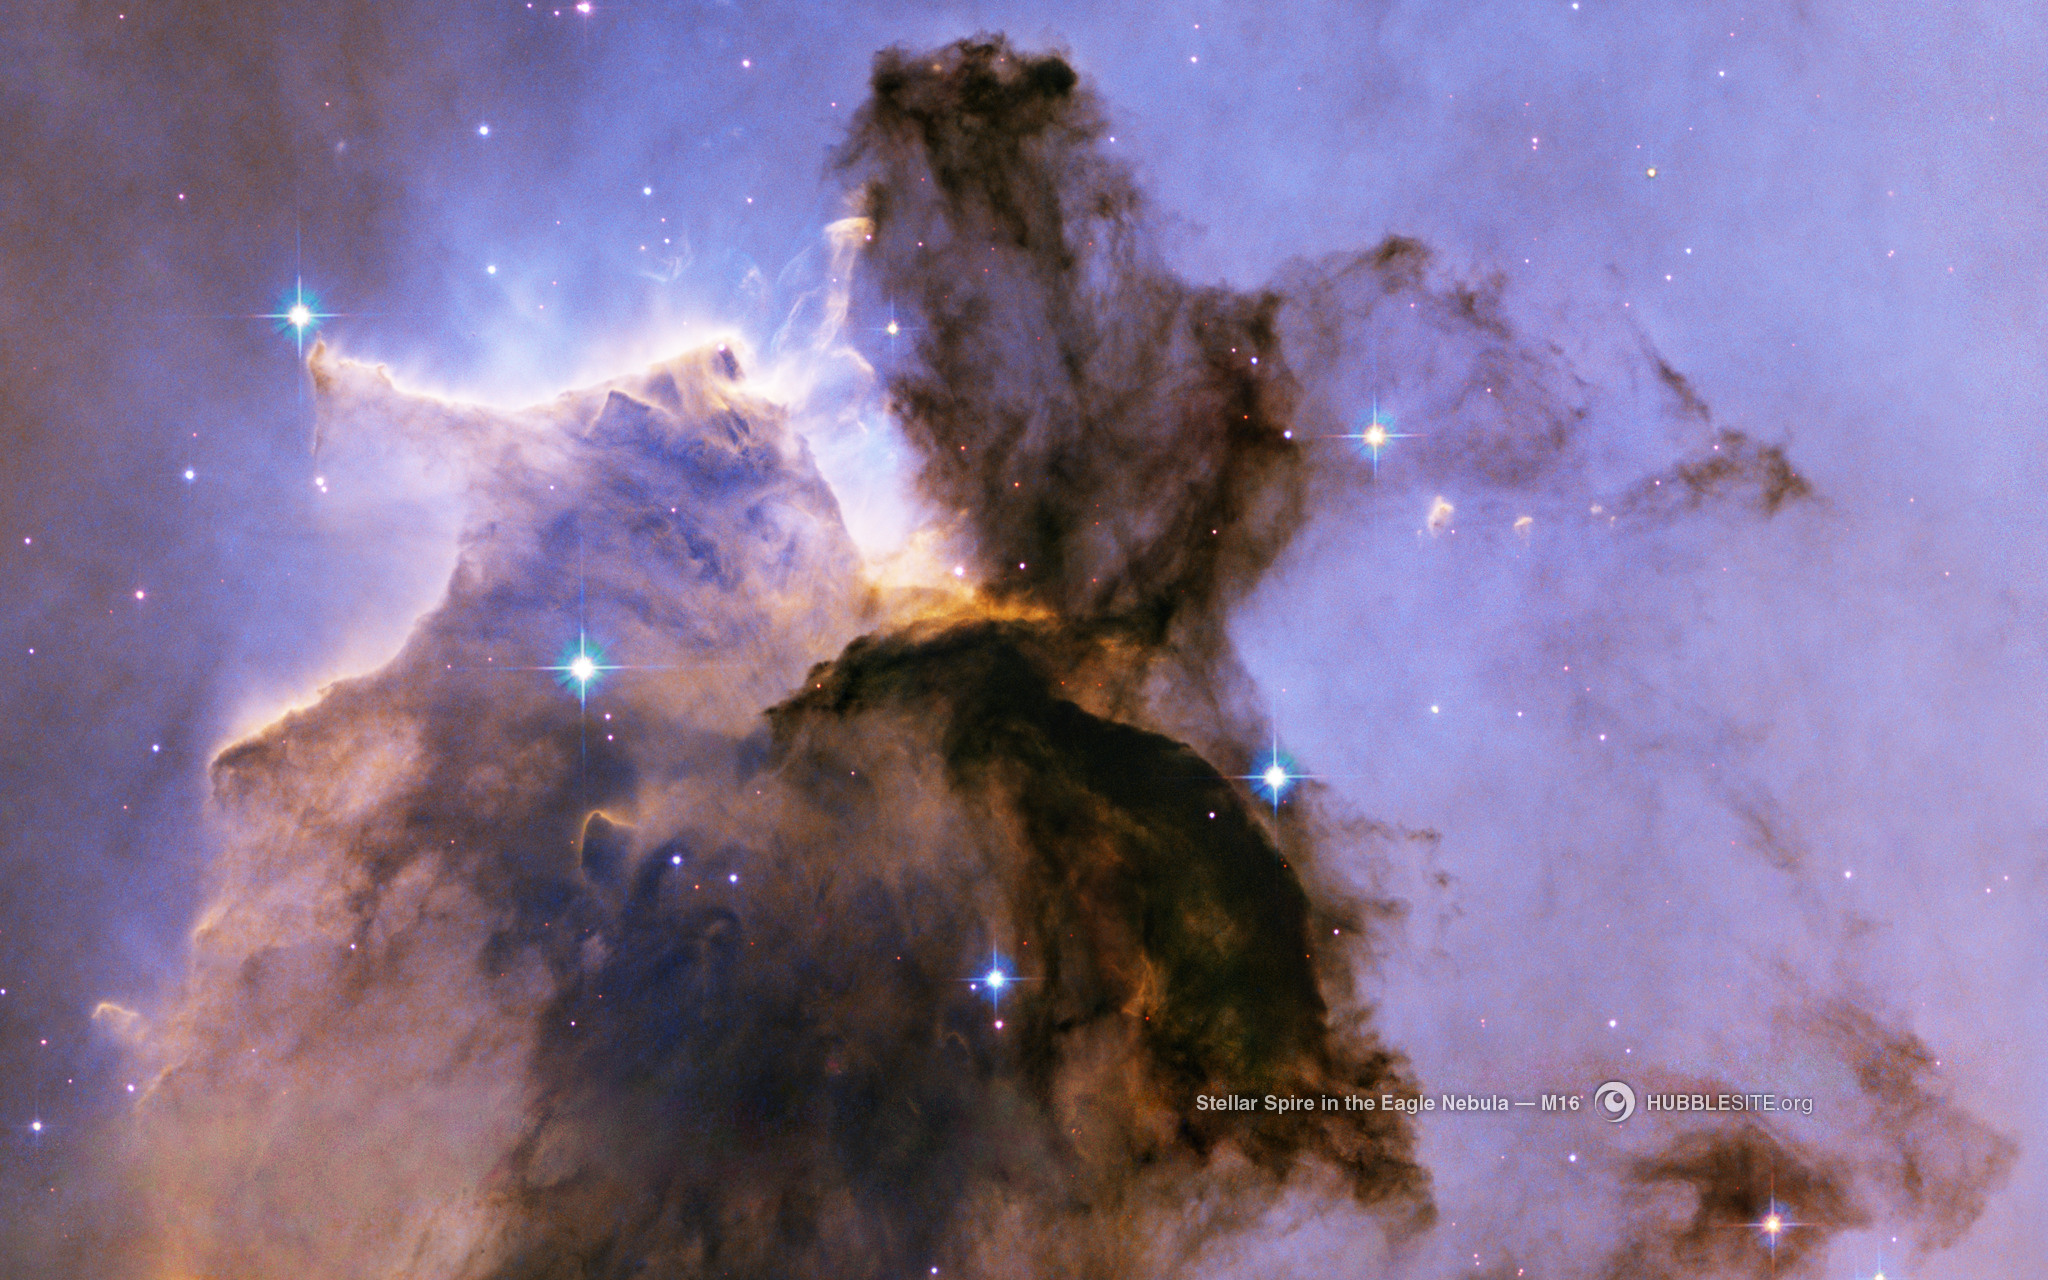 Stellar Spire in the Eagle Nebula